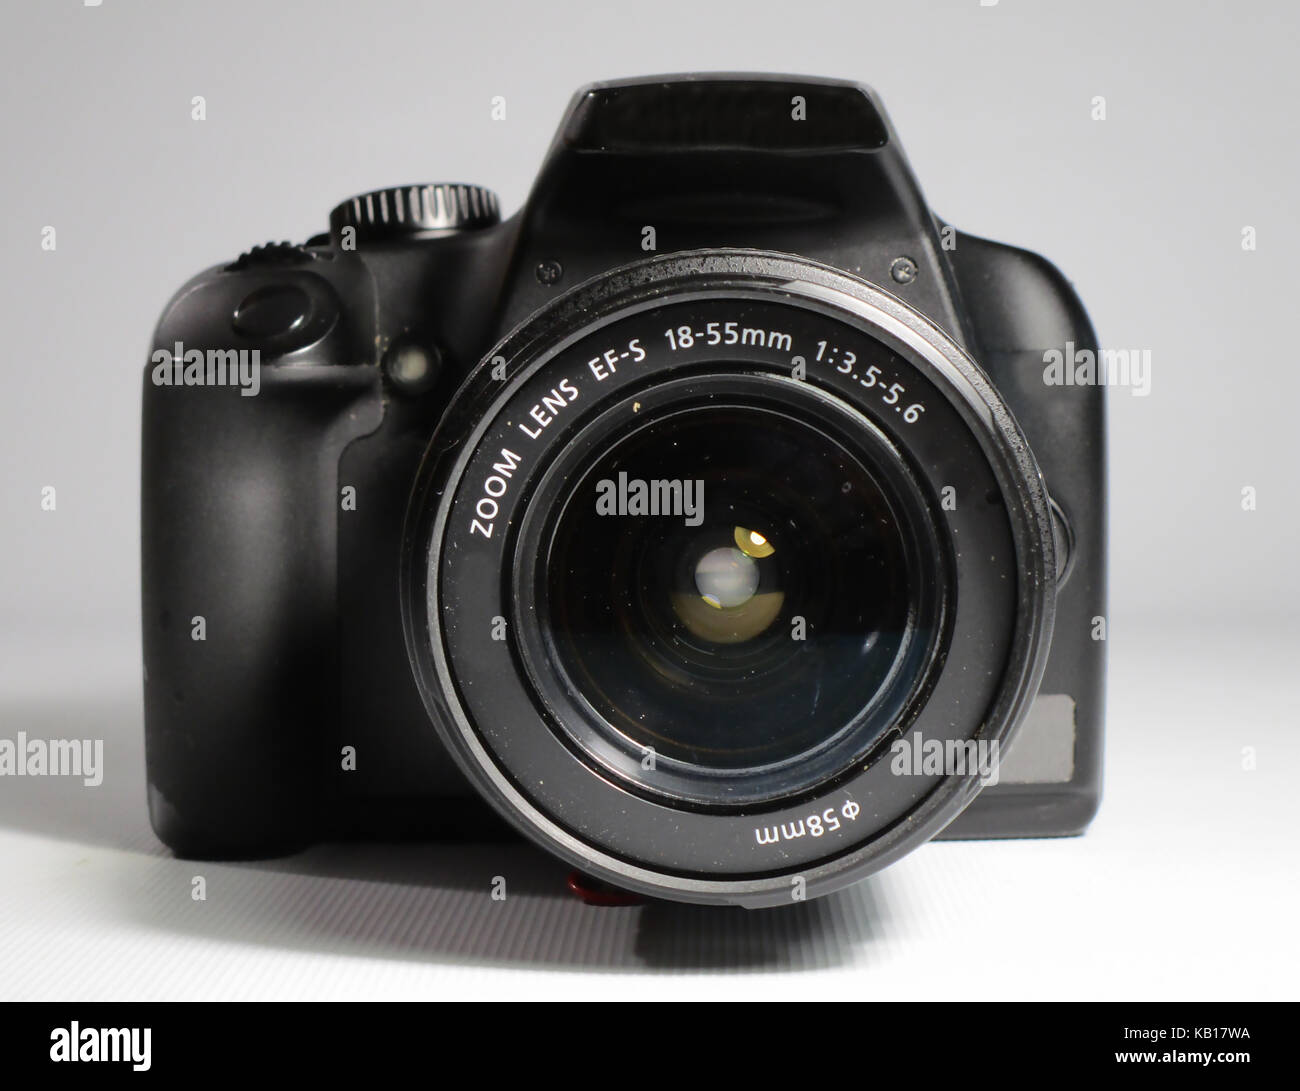 Fotocamera reflex digitale Foto Stock